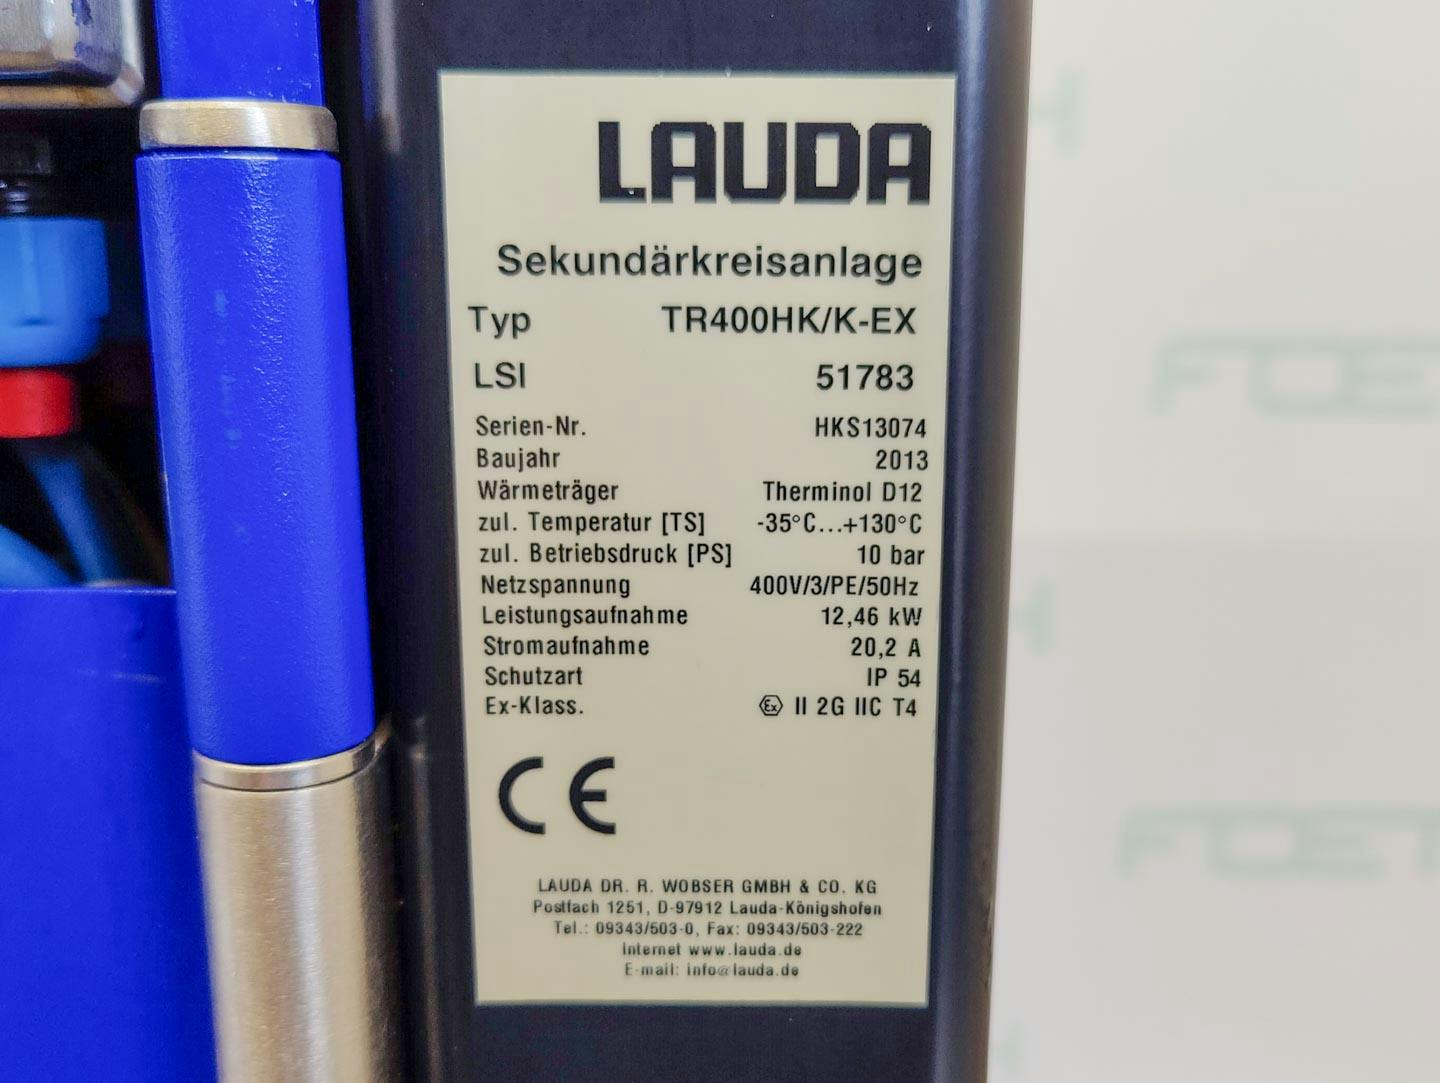 Lauda TR400 HK/KT-EX "secondary circuit system" - циркуляционный термостат - image 16